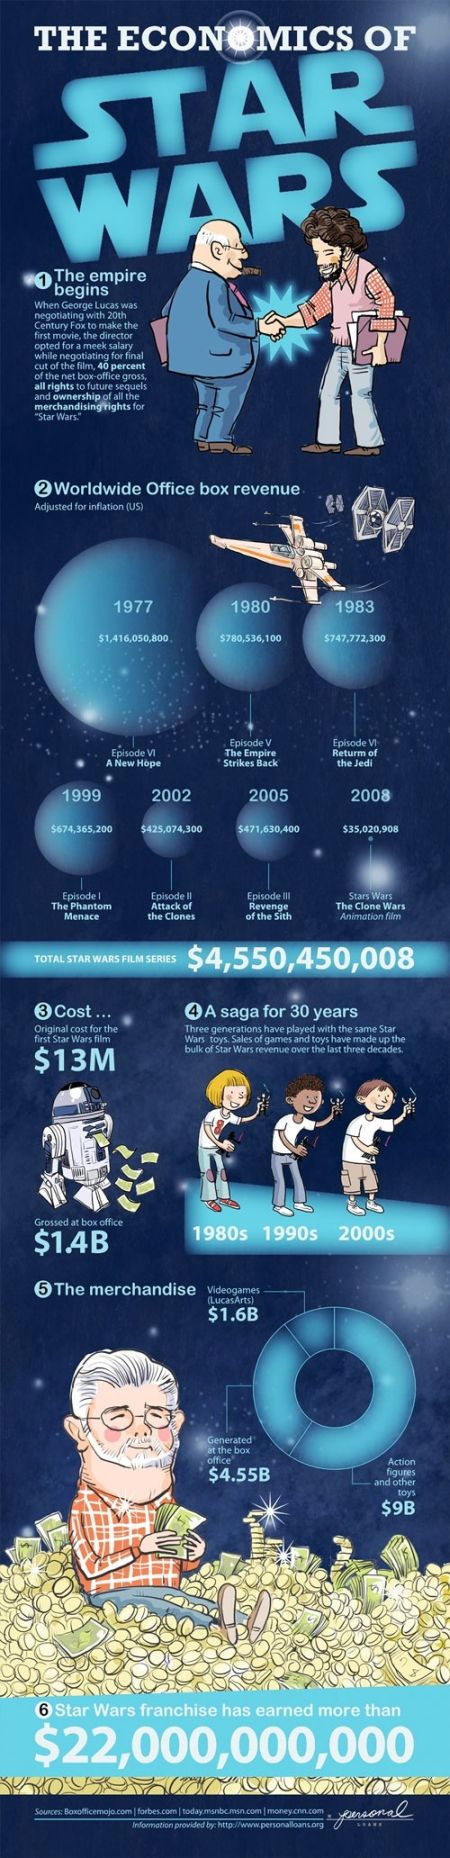 the economics of Star Wars